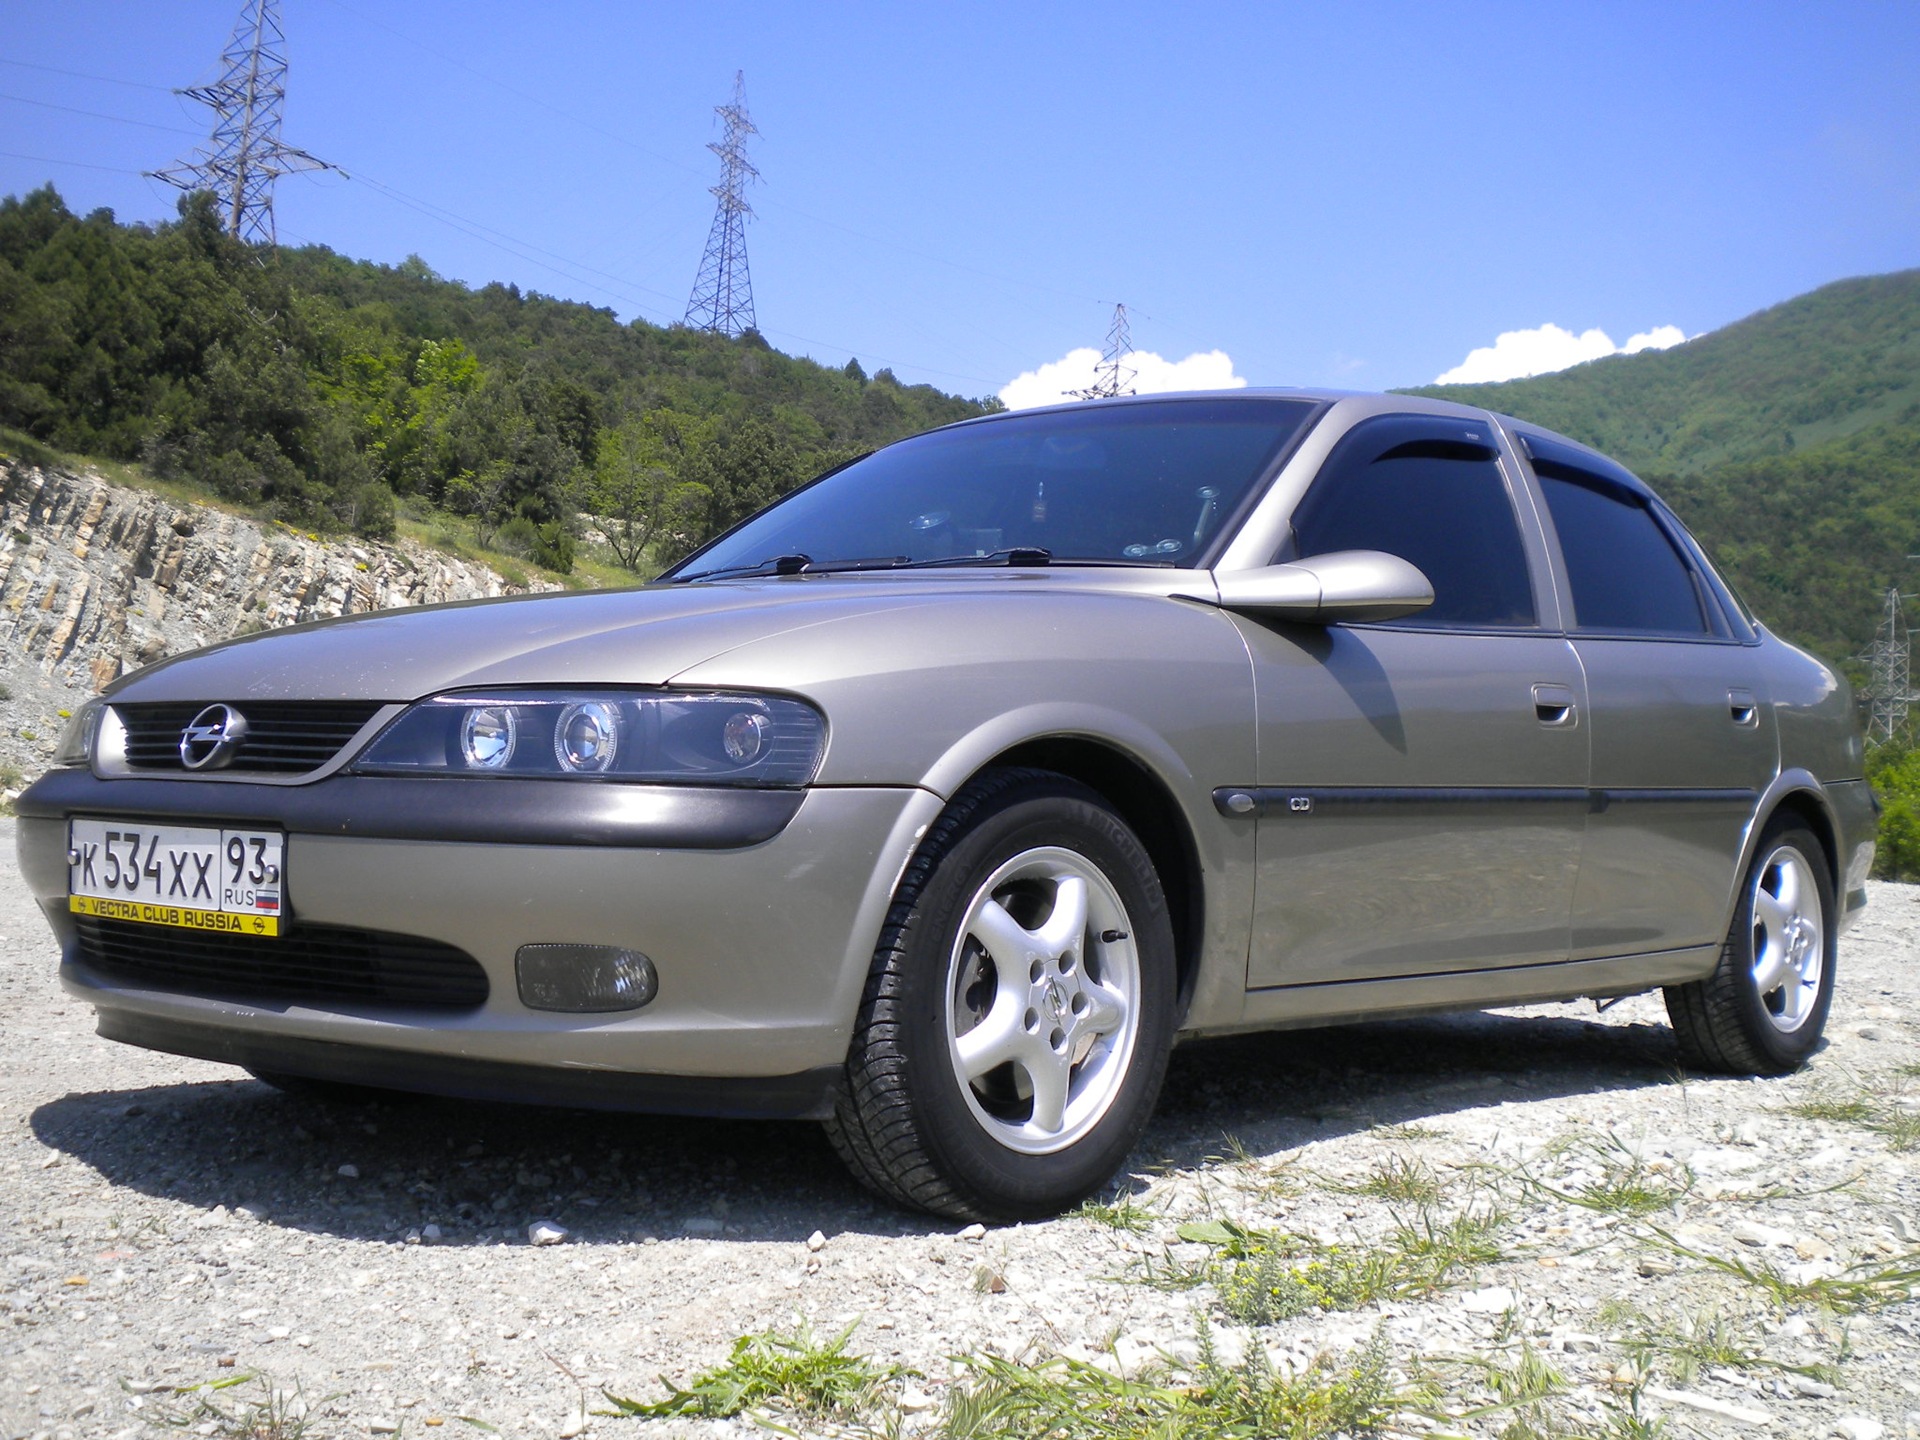 Автомобиль вектра б. Opel Vectra b. Opel Vectra a 2.0. Опель Вектра с 2.2. Opel Vectra b седан.